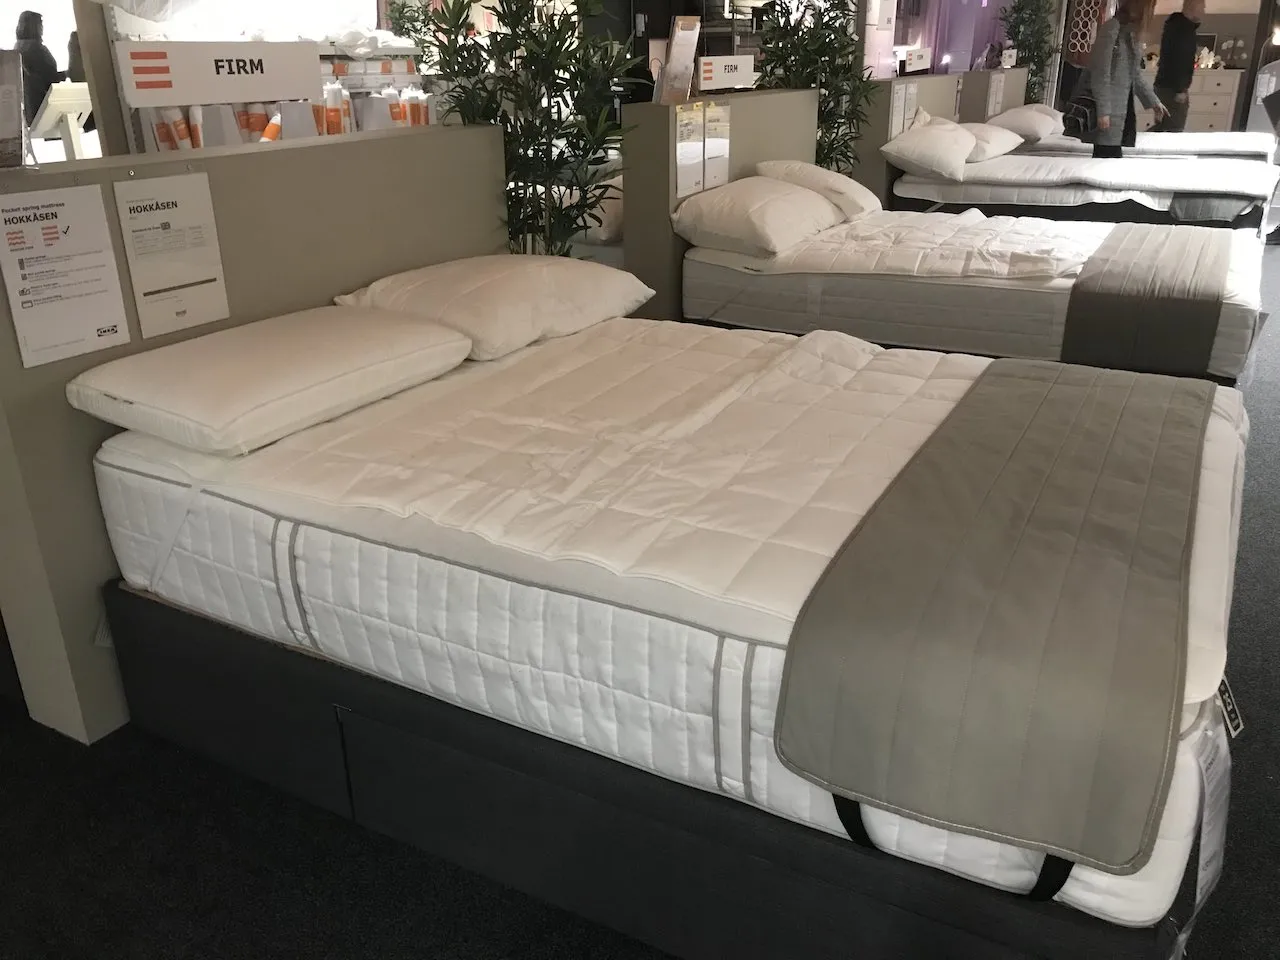 Hokkasen mattress in a showroom